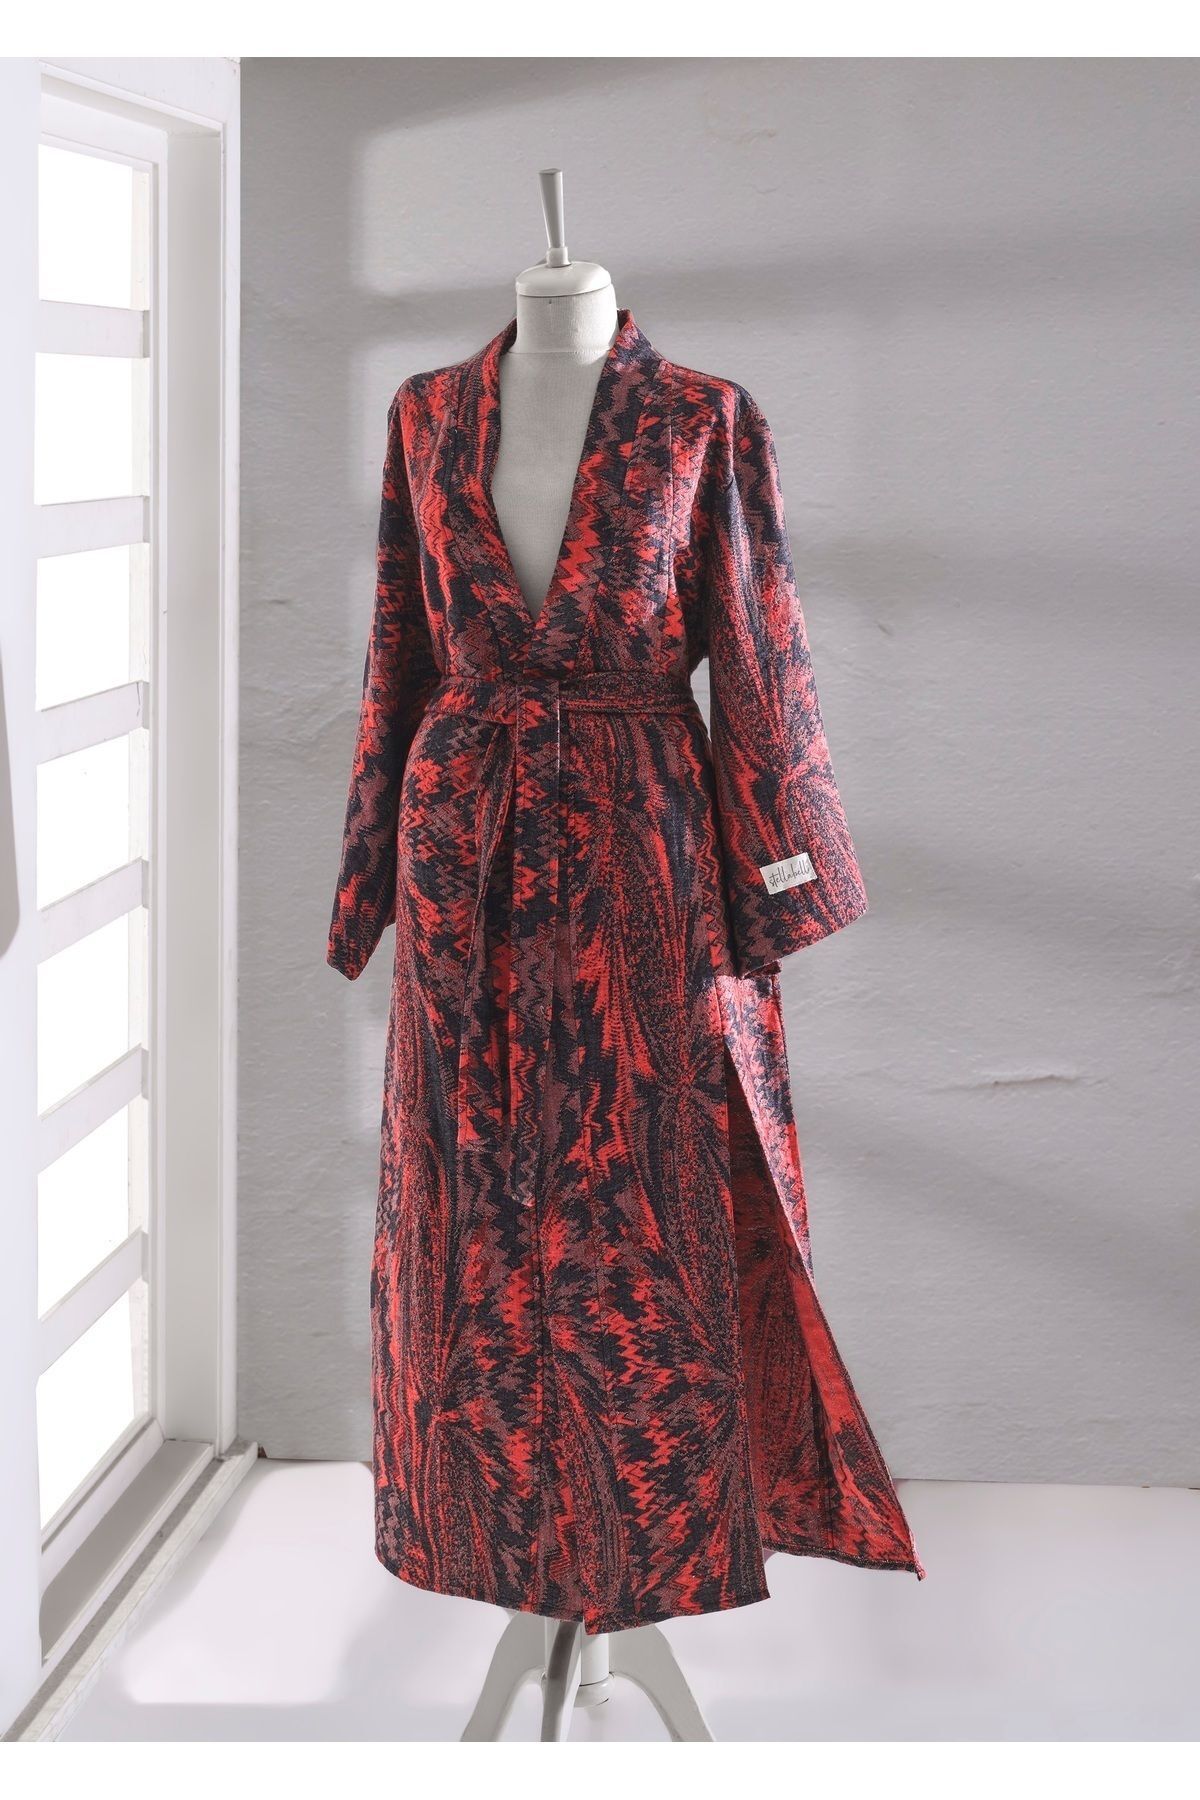 Stella Belli %100 Pamuk El Dokuması Desenli Kimono Peştemal Bornoz | Kutulu | Respiro |kırmızı-siyah